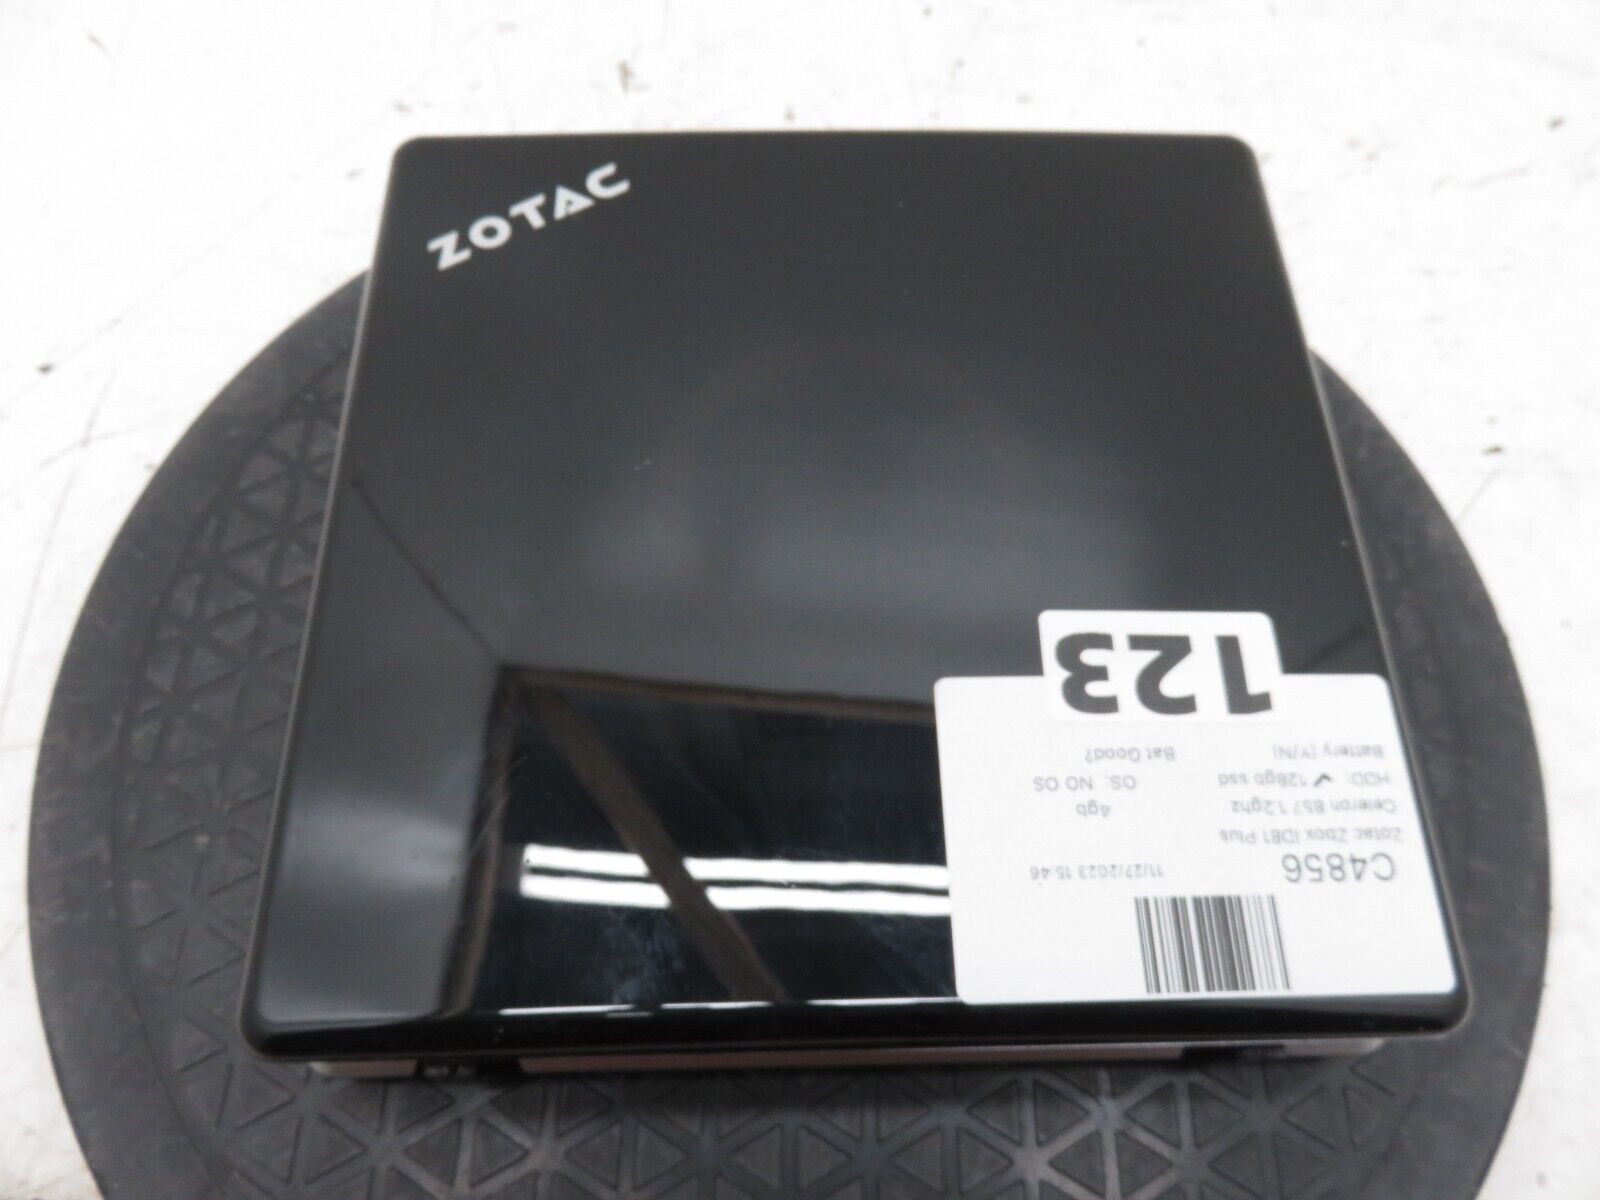 Zotac Zbox iD81 Plus Mini Computer Intel Celeron 857 4GB Ram 128GB SSD No OS